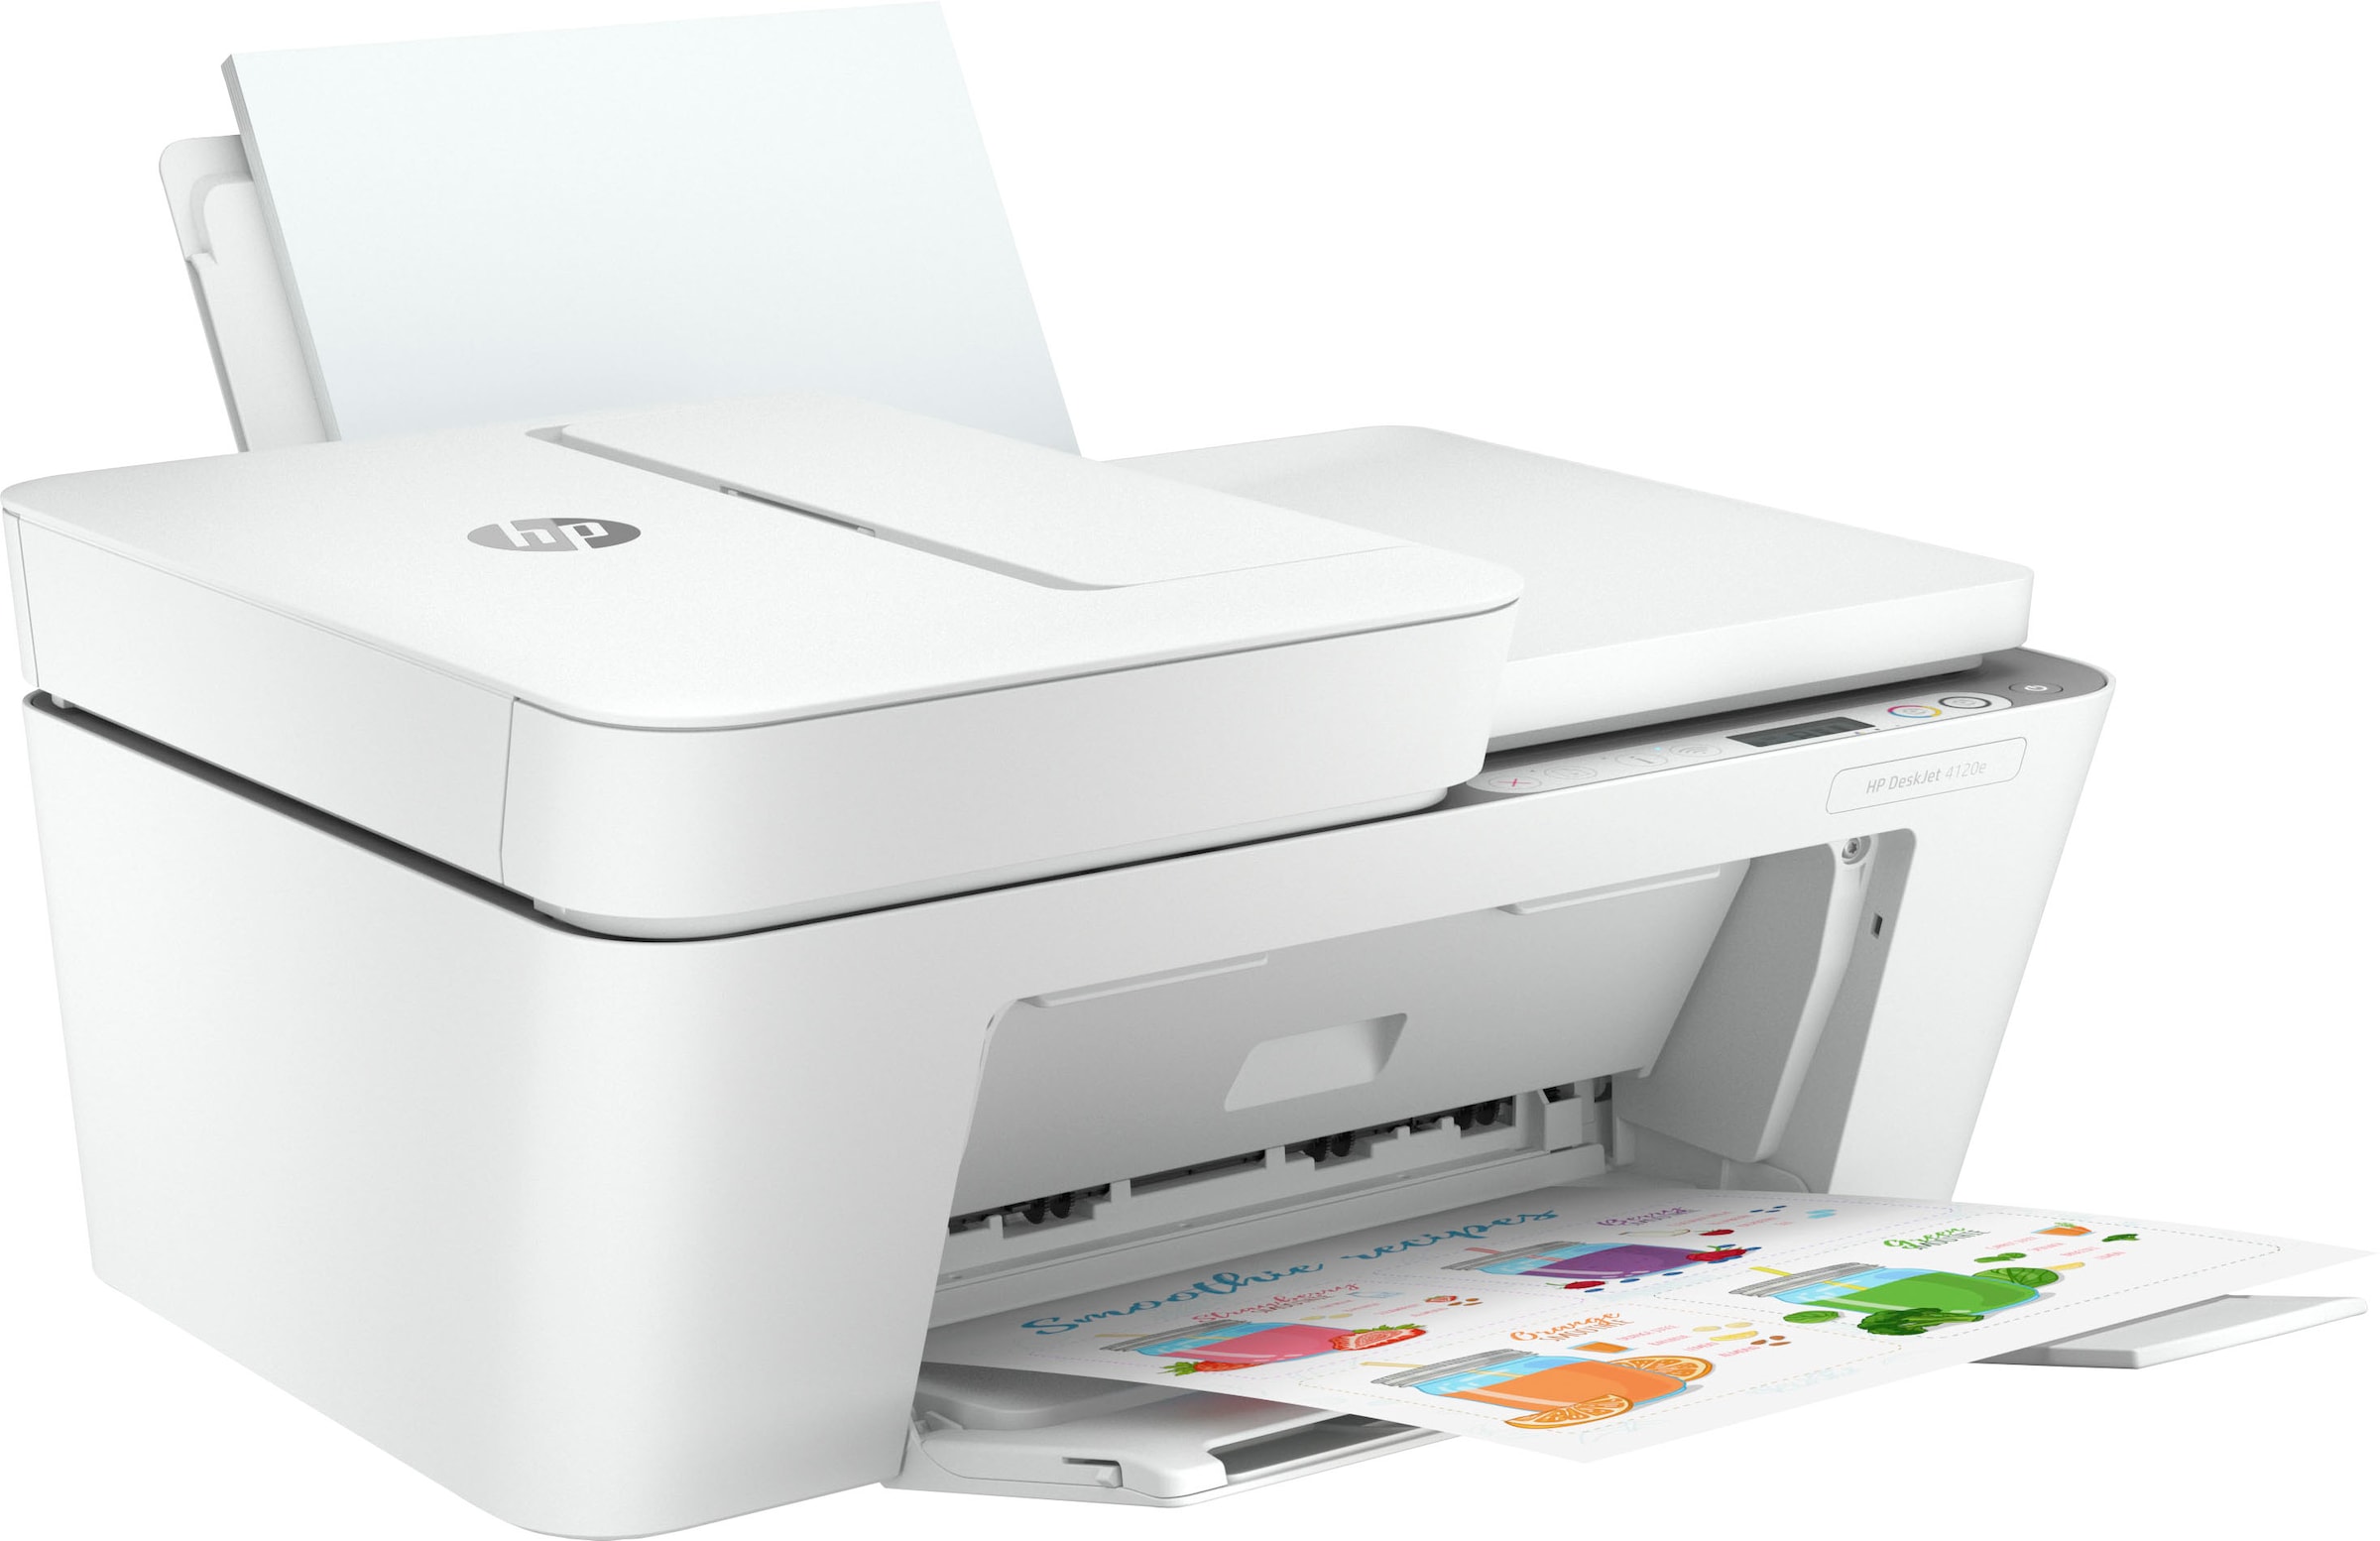 HP Multifunktionsdrucker »DeskJet 4120e All in one Drucker«, 6 Monate gratis Drucken mit HP Instant Ink inklusive